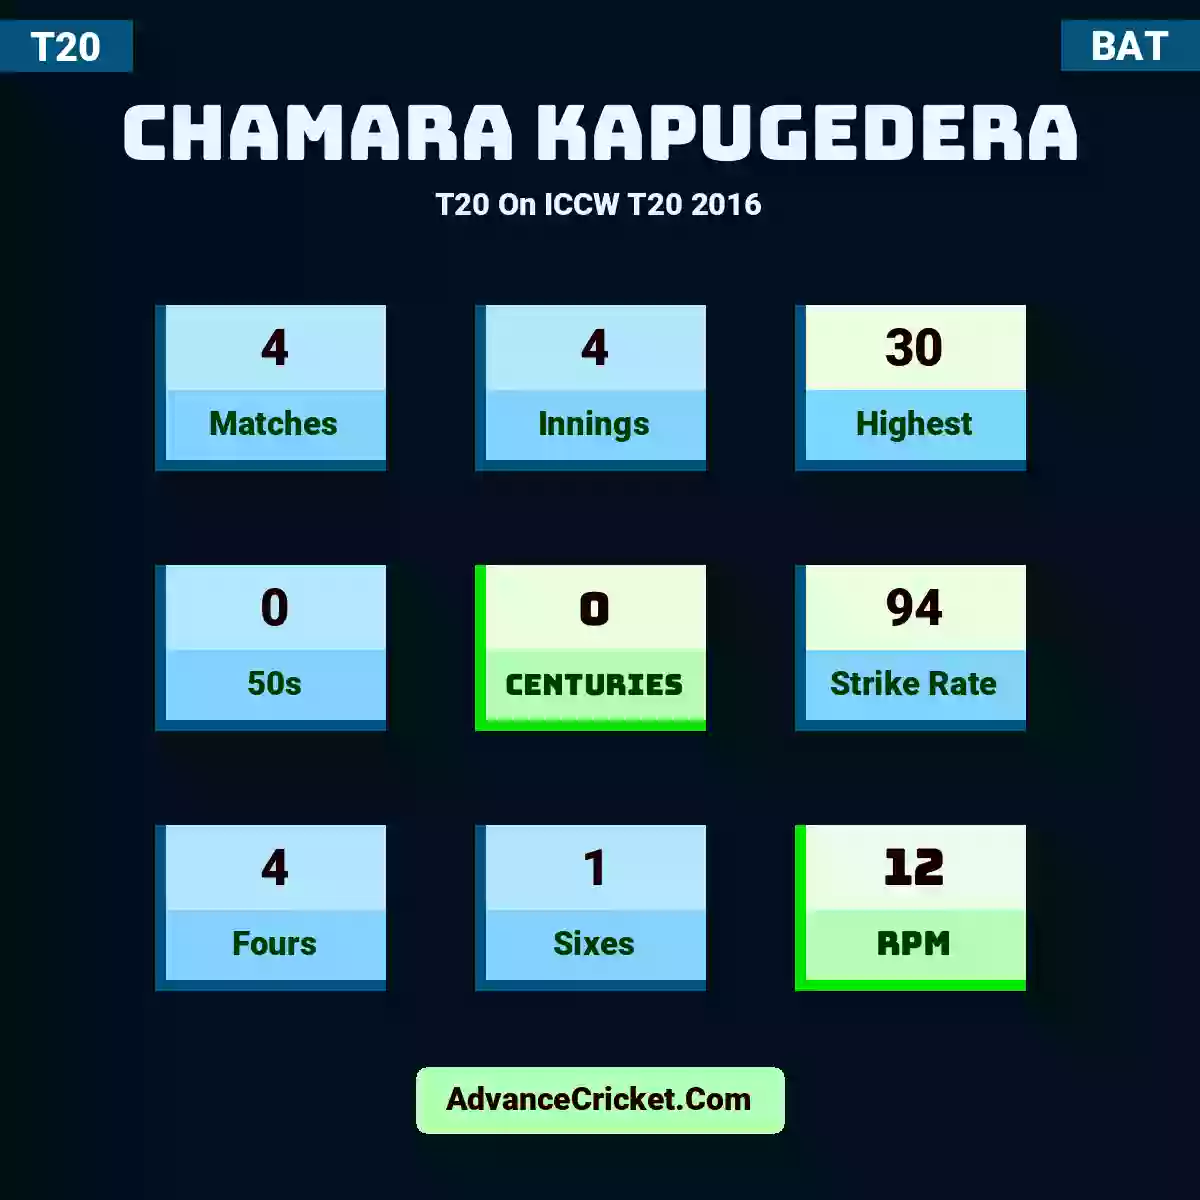 Chamara Kapugedera T20  On ICCW T20 2016, Chamara Kapugedera played 4 matches, scored 30 runs as highest, 0 half-centuries, and 0 centuries, with a strike rate of 94. C.Kapugedera hit 4 fours and 1 sixes, with an RPM of 12.